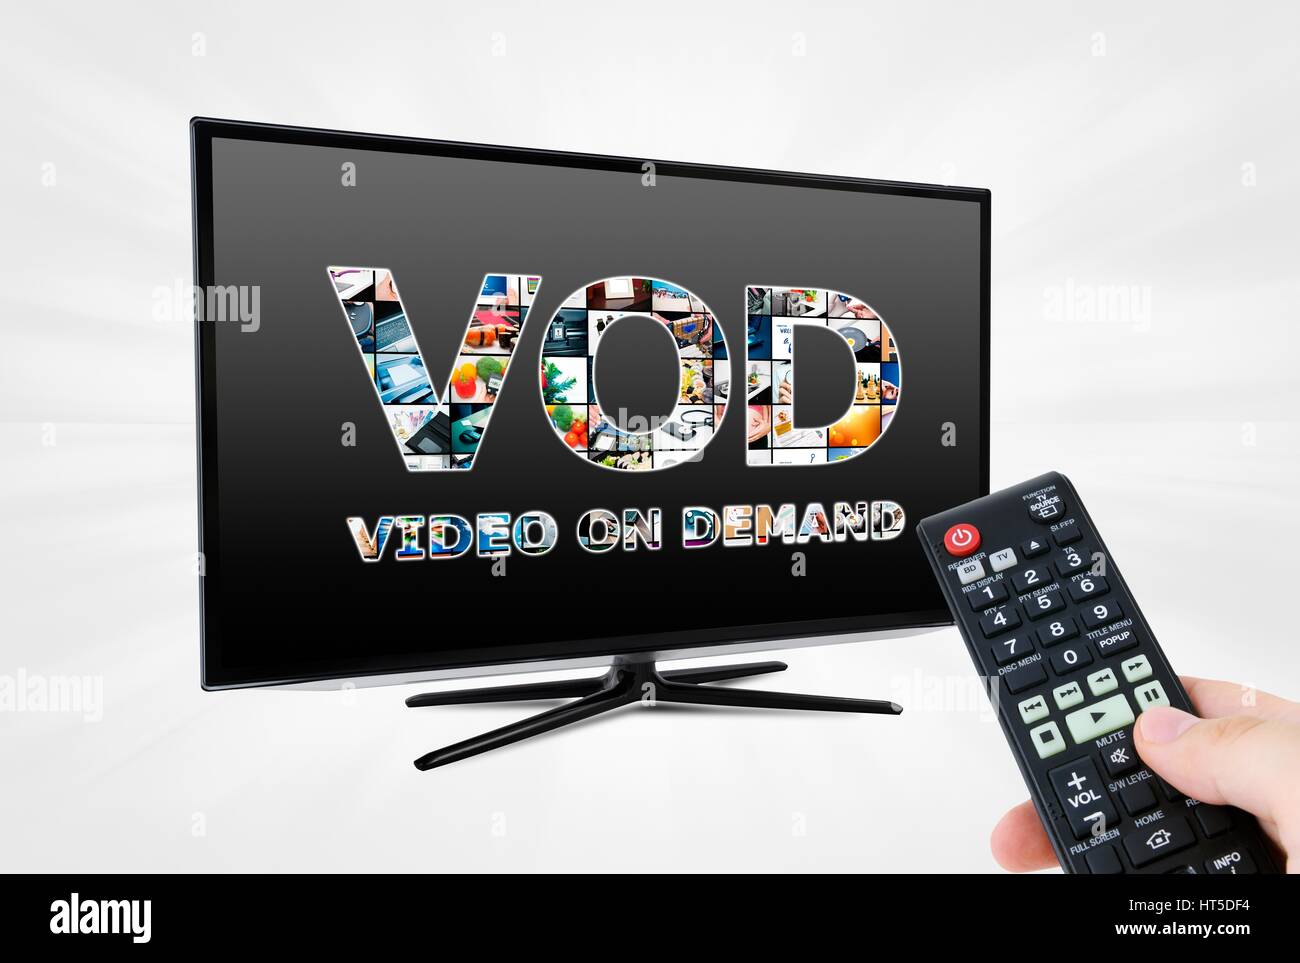 vod television